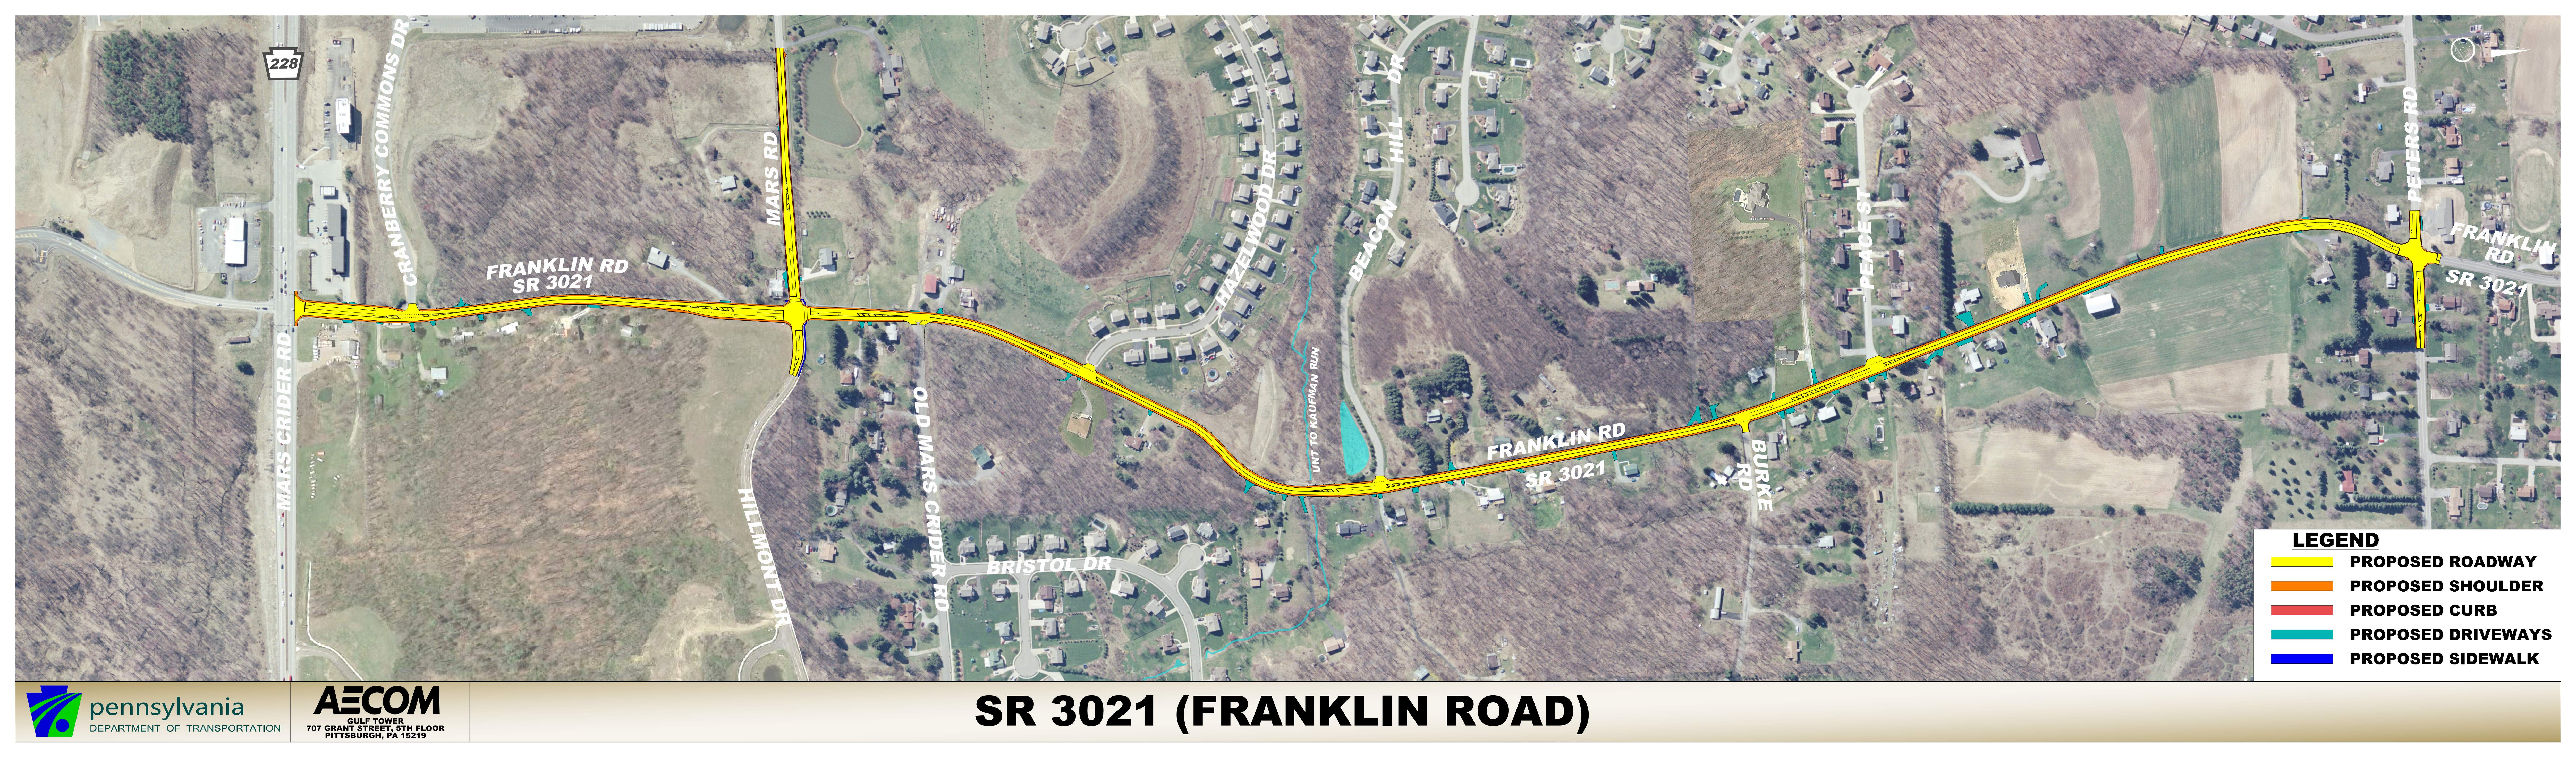 SR 3021 Franklin Rd - Roll Plot w image - PennDOT Website.jpg